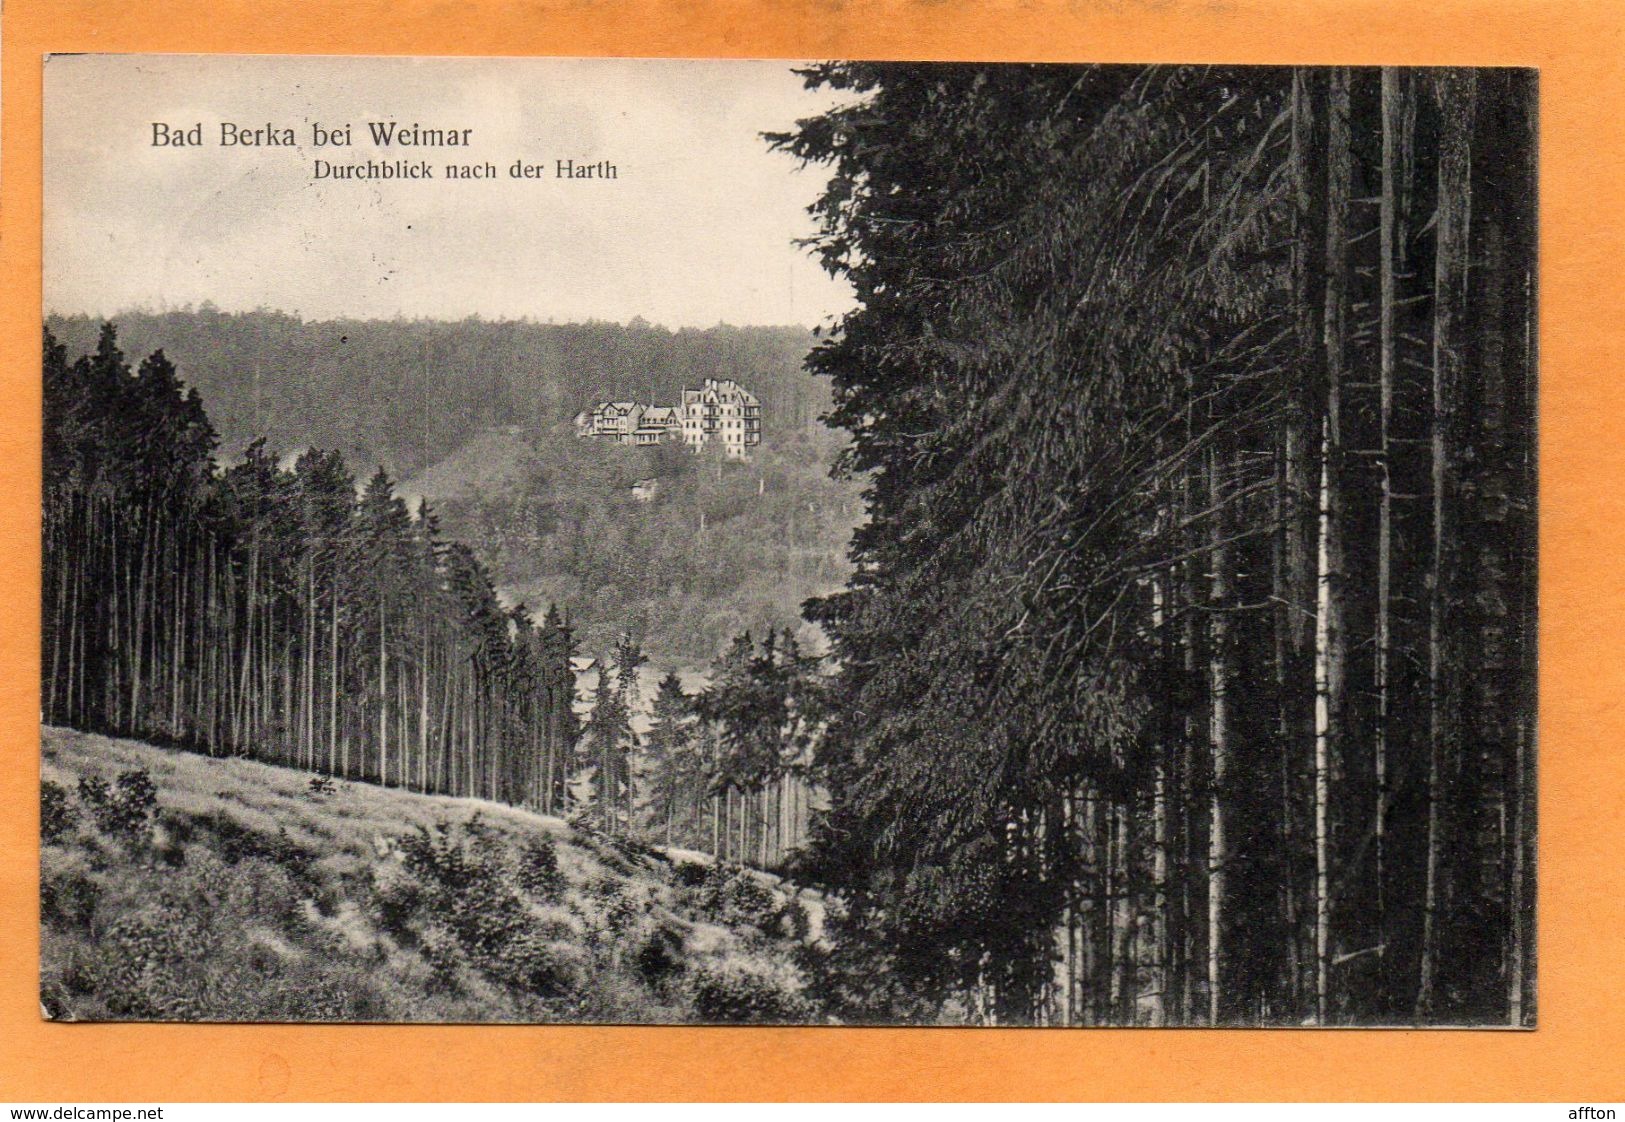 Bad Berka Bei Weimar Germany 1917 Postcard - Bad Berka